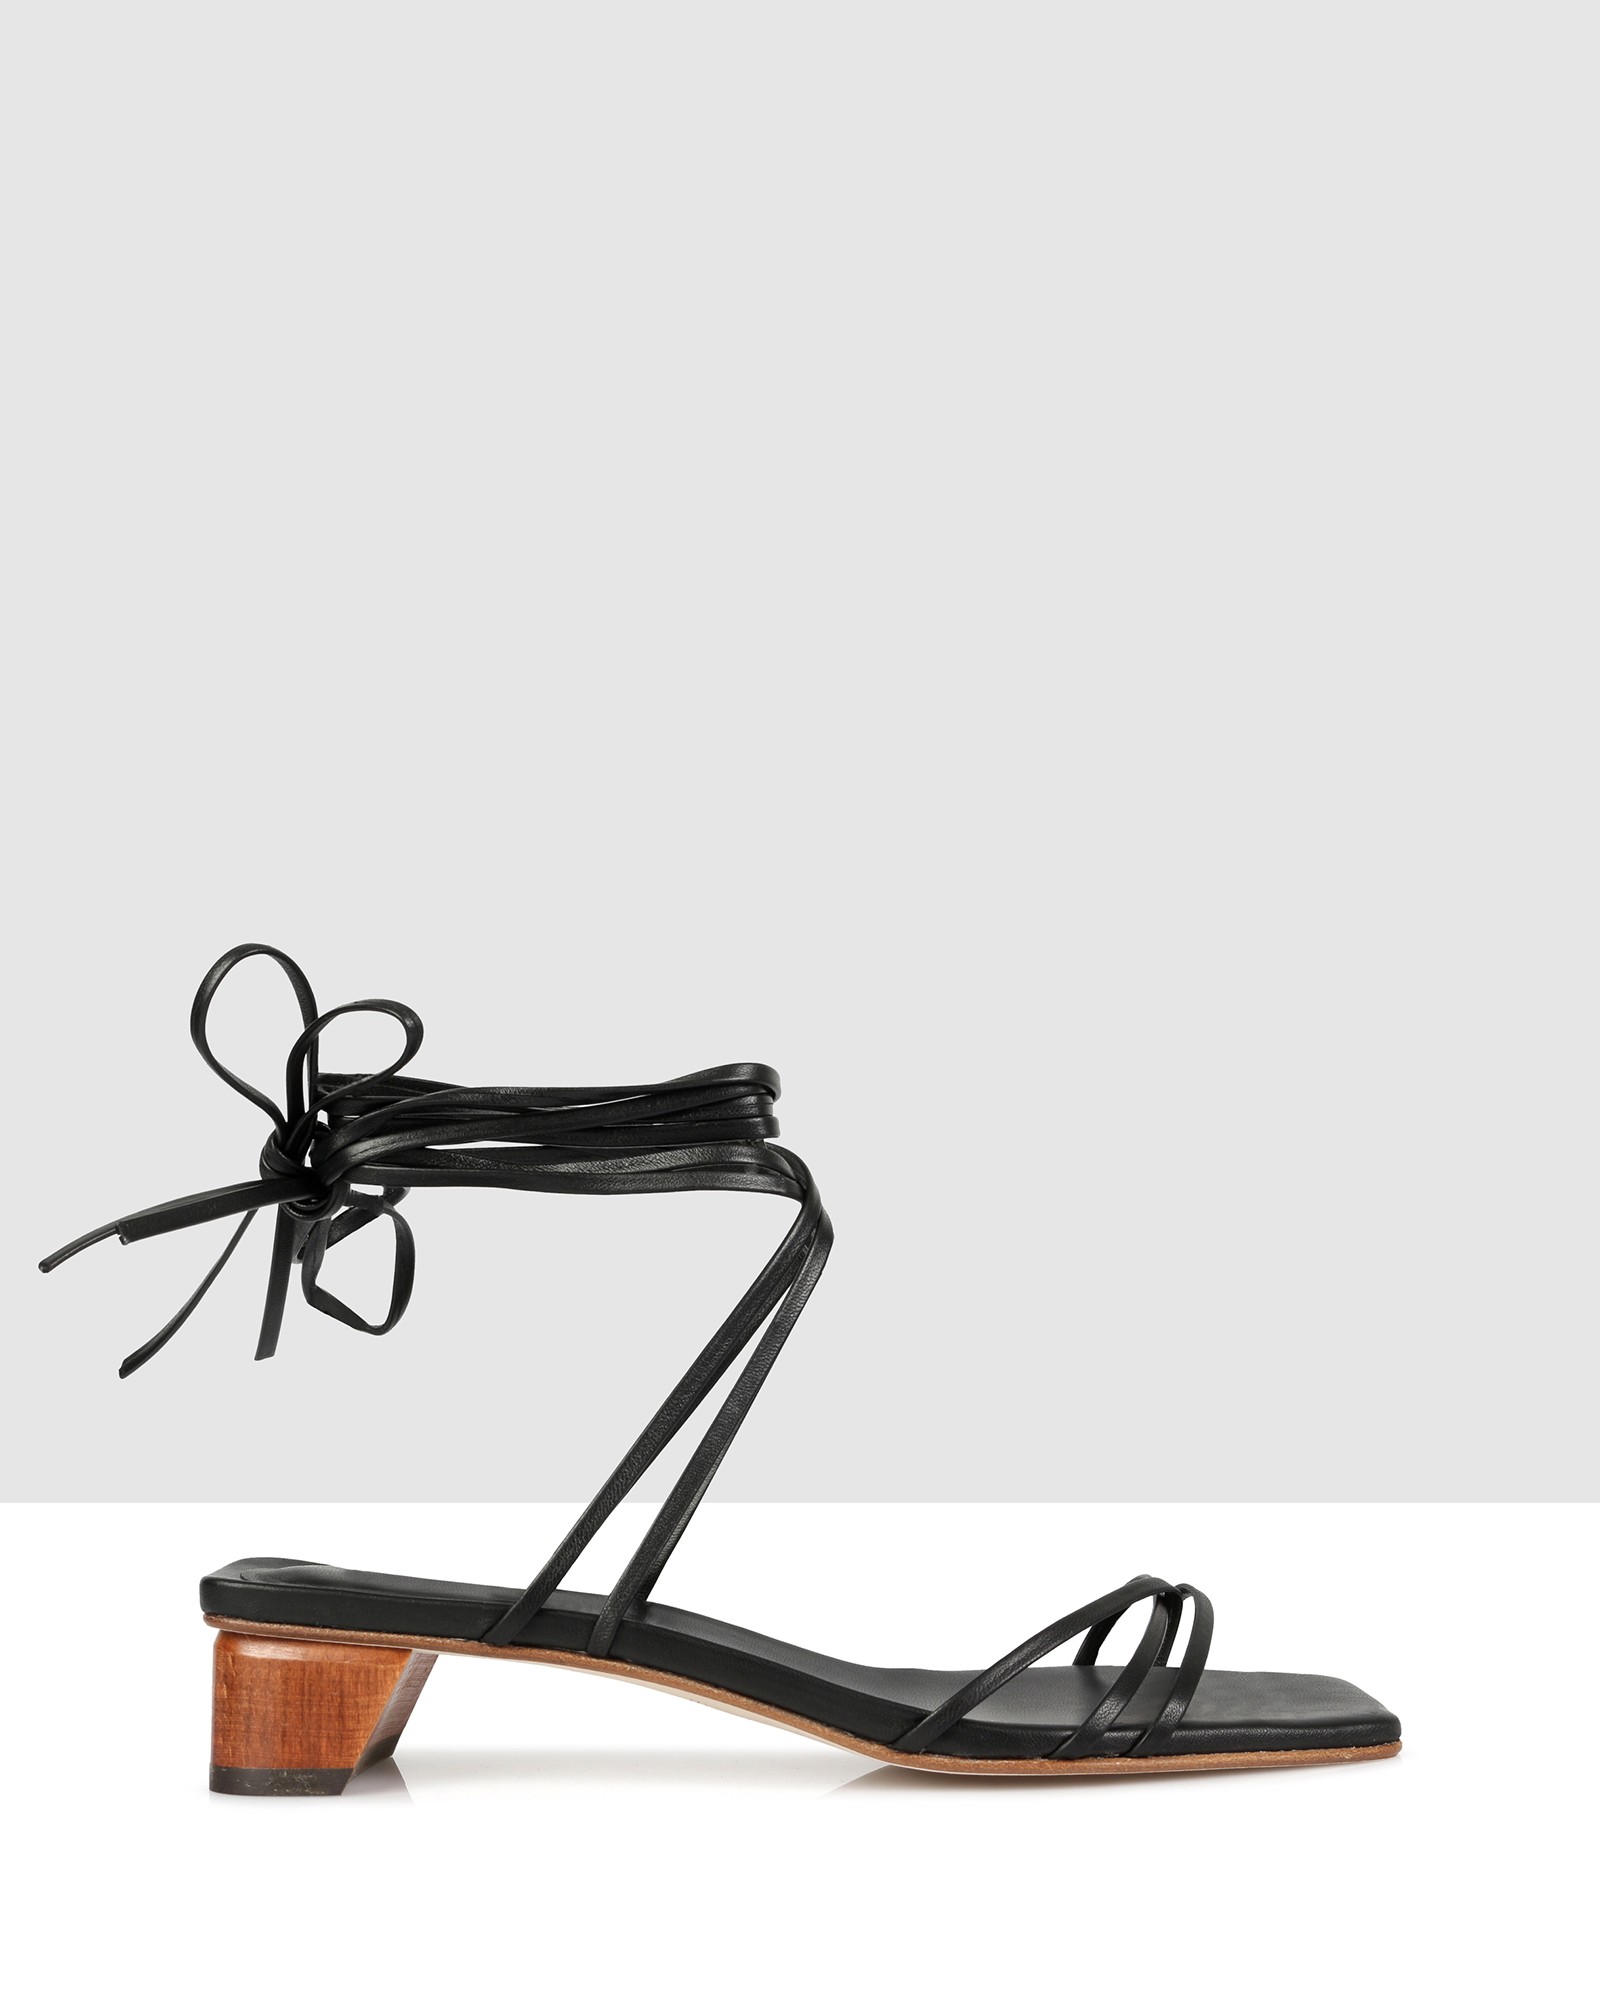 Blair Sandals Black by Beau Coops | ShoeSales